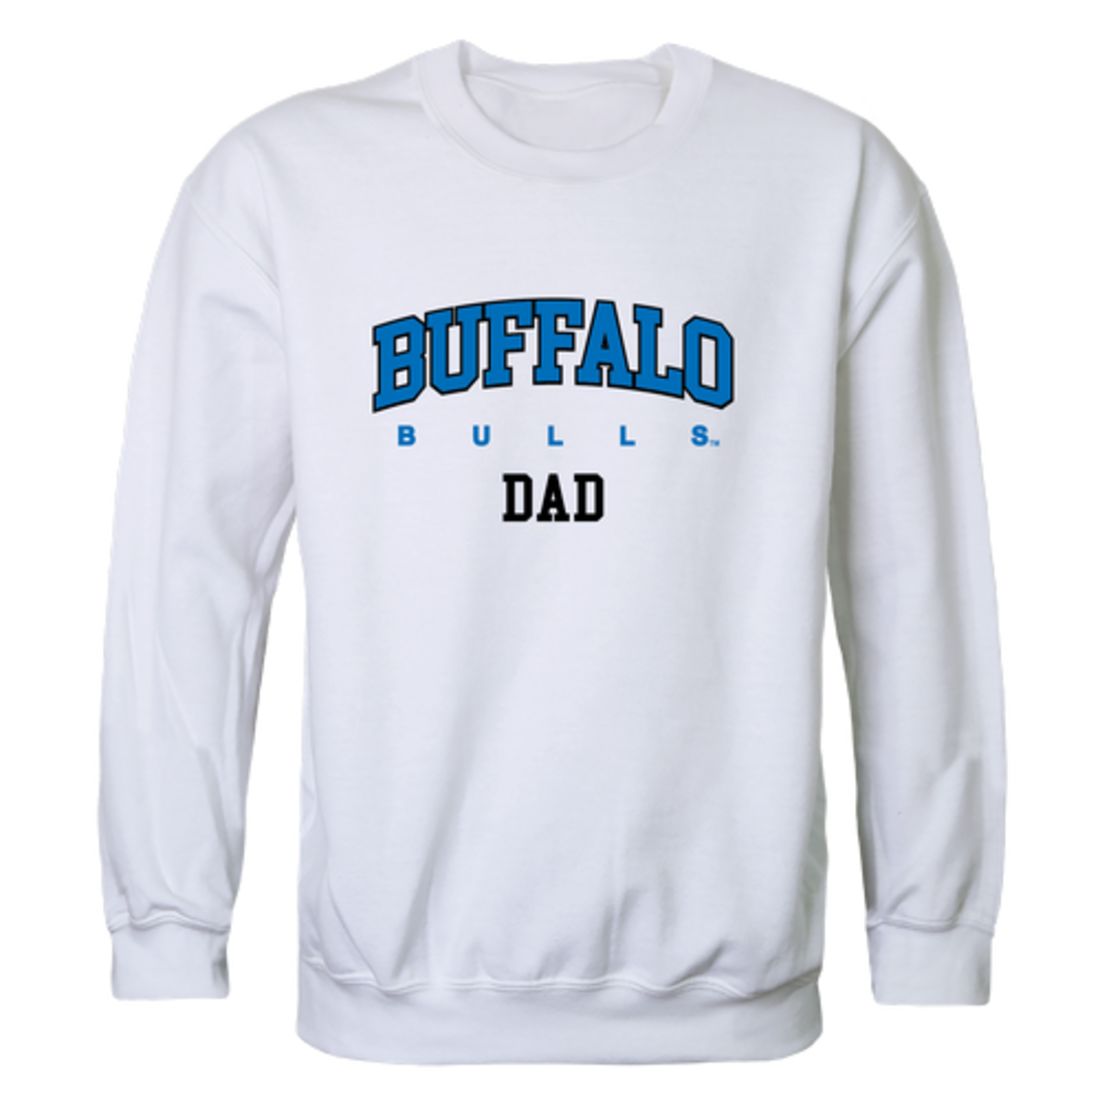 SUNY University at Buffalo Bulls Dad Fleece Crewneck Pullover Sweatshirt Heather Grey-Campus-Wardrobe